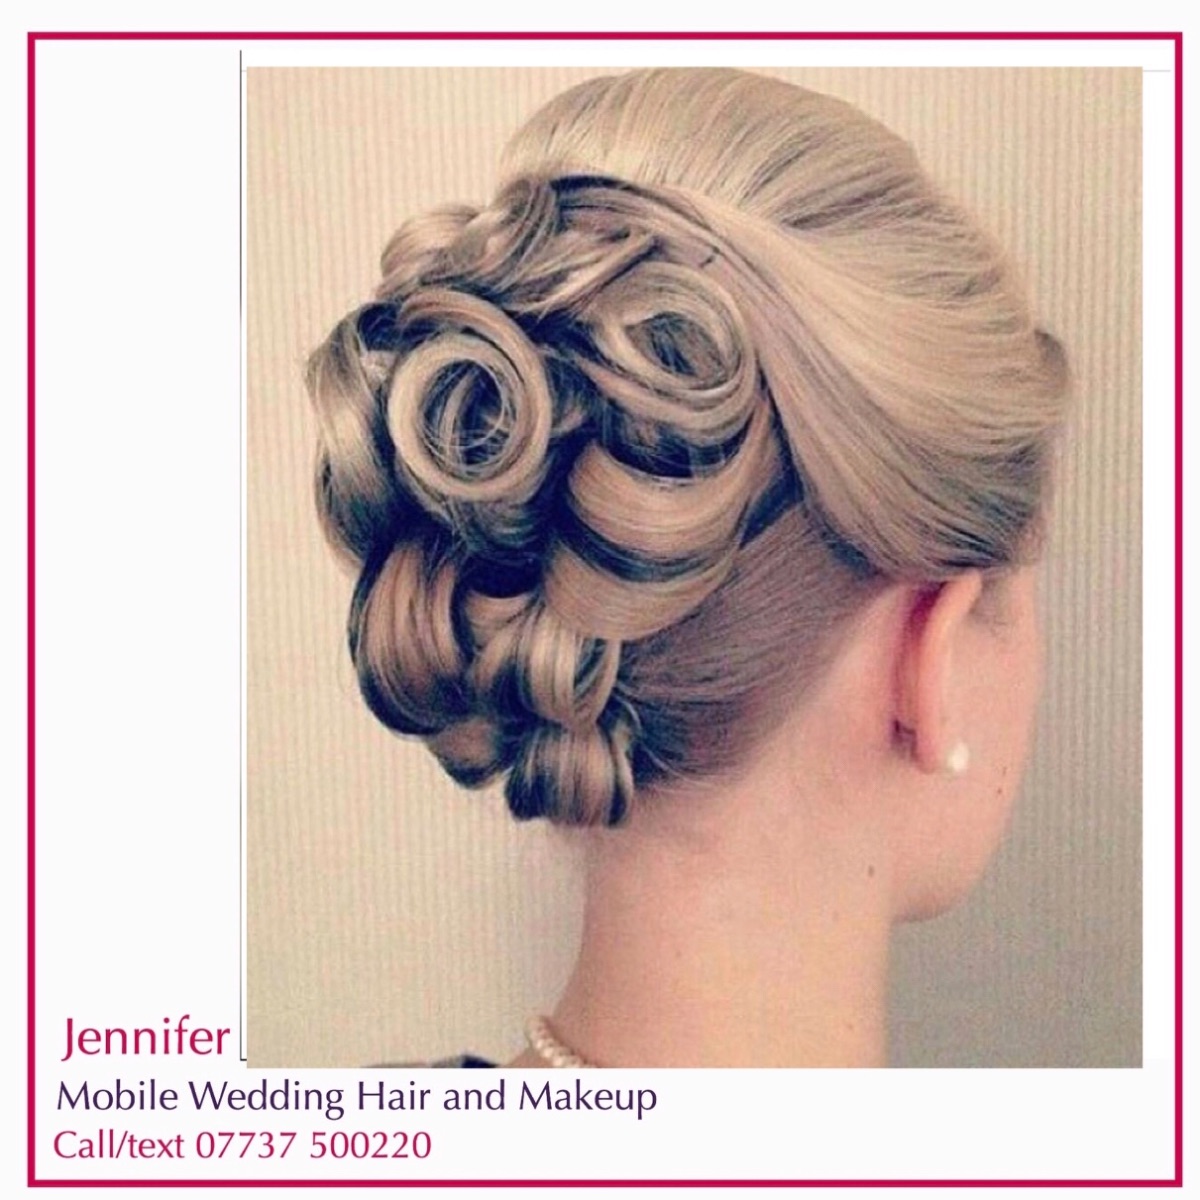 Mobile Wedding Hair & Makeup -Image-6